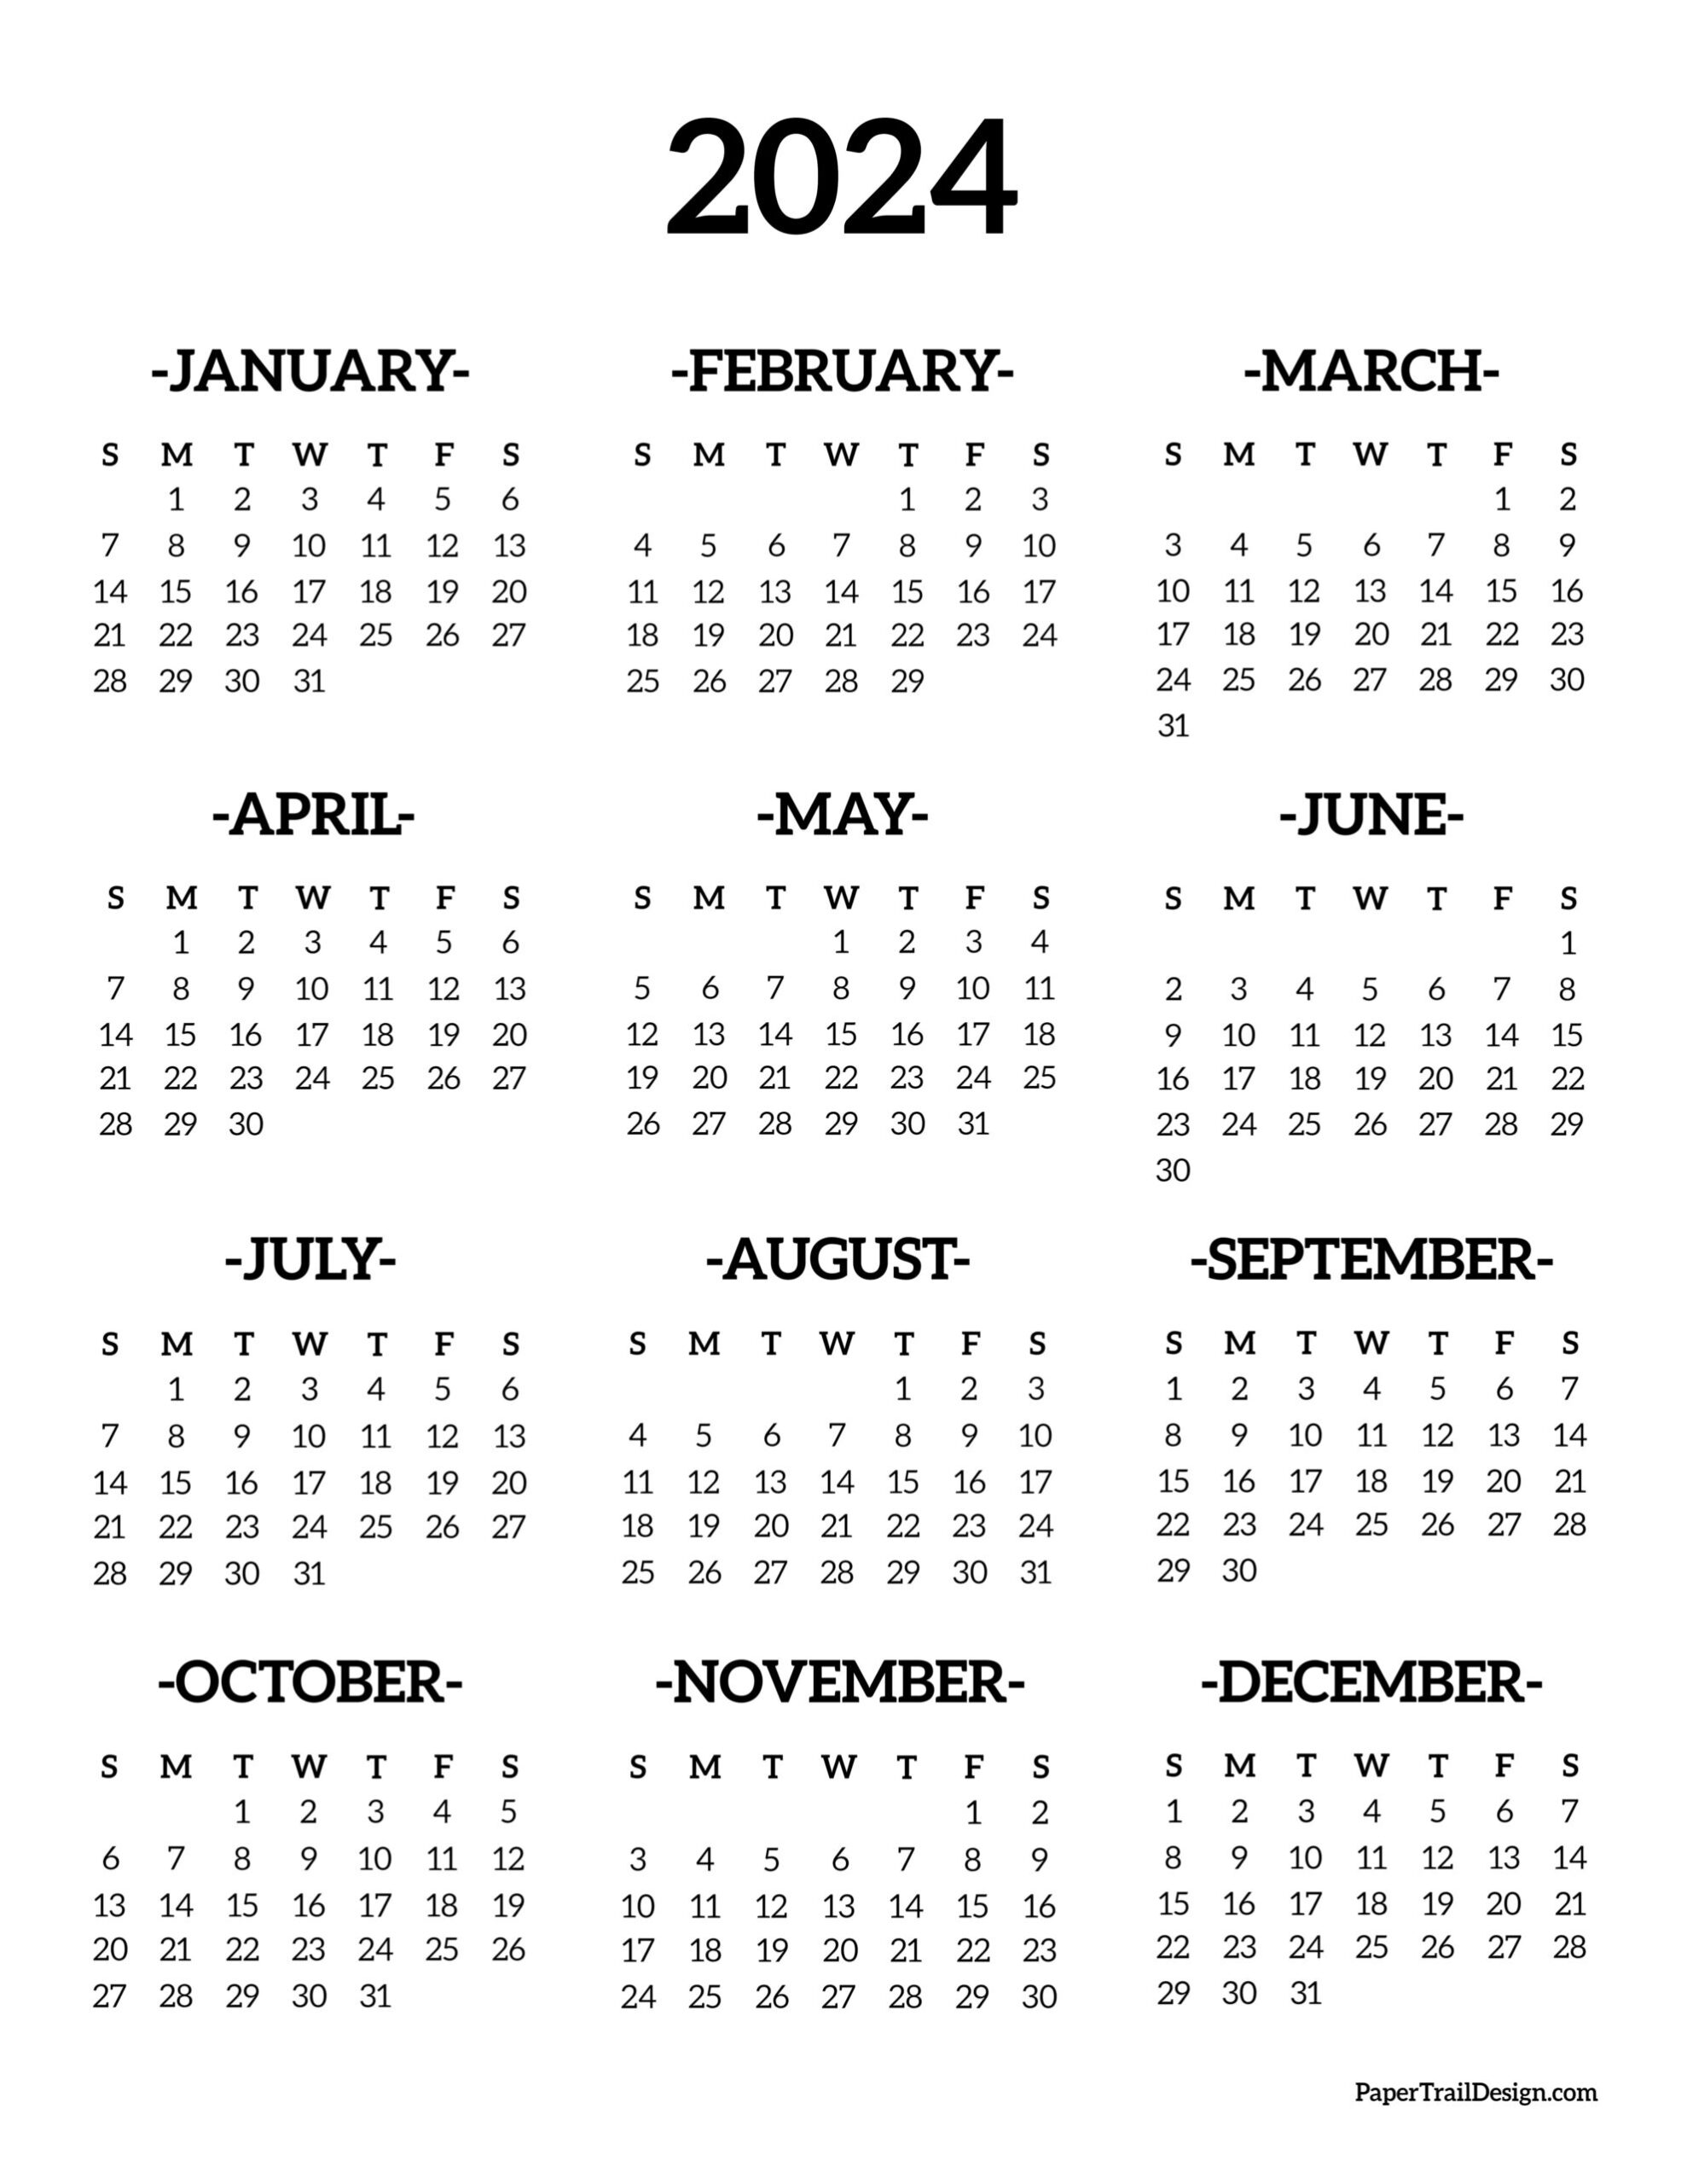 Calendar 2024 Printable One Page - Paper Trail Design | Printable Calendar 2024 Full Year